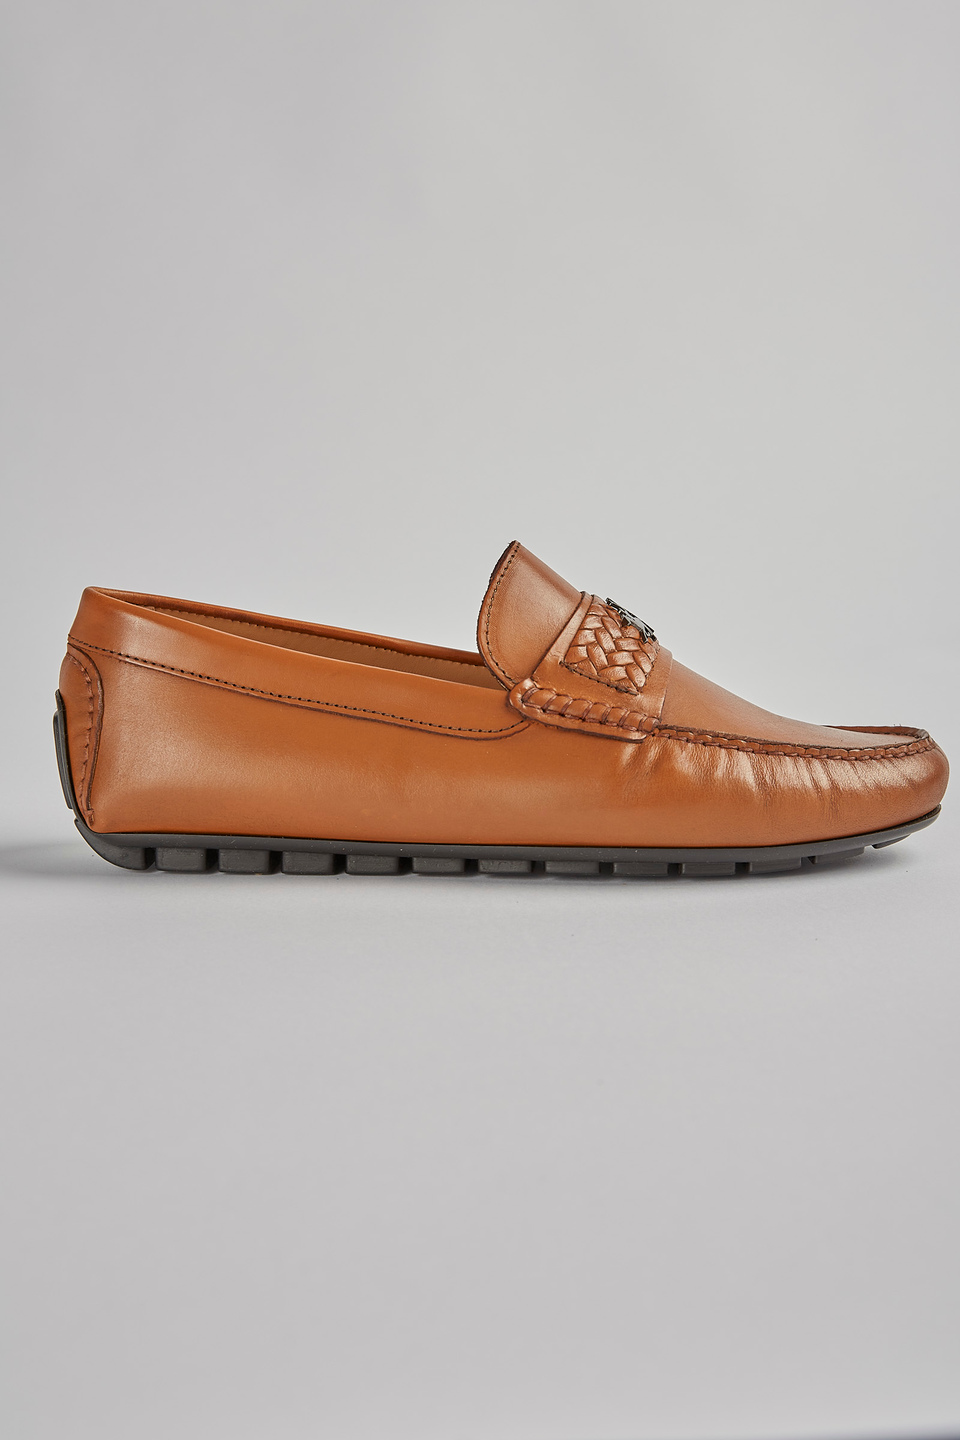 Hand-stitched leather loafer - La Martina - Official Online Shop